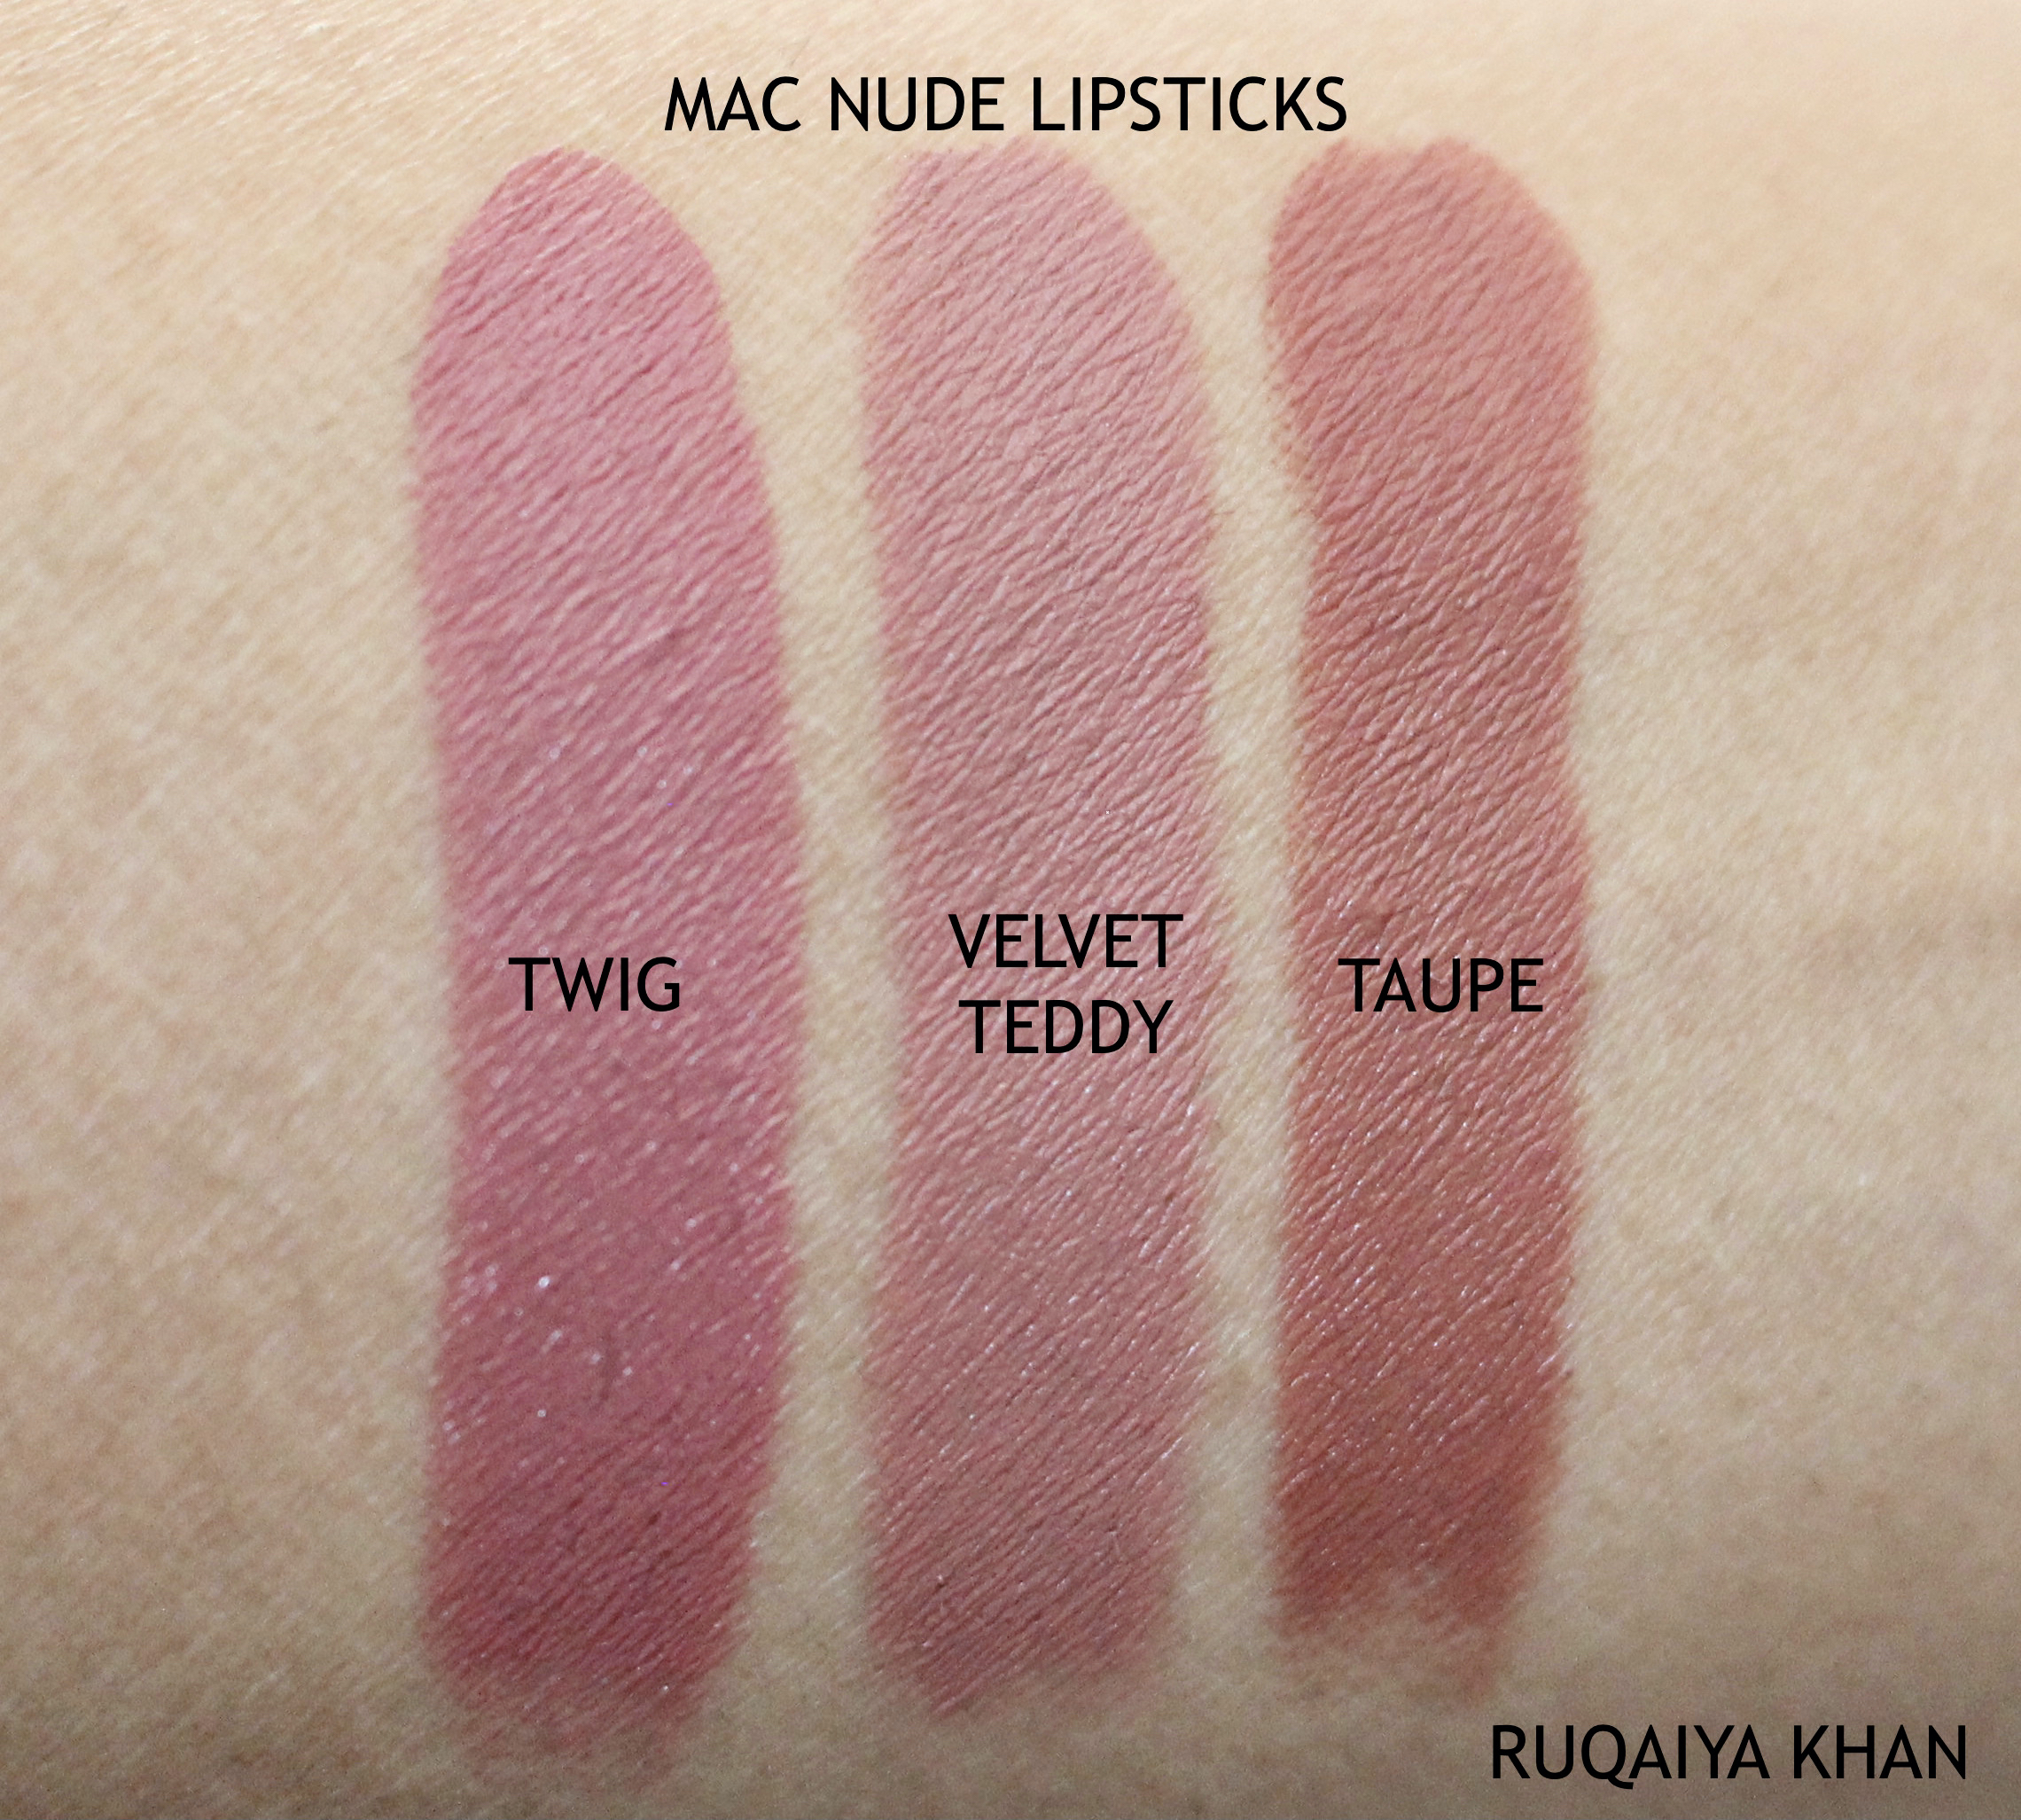 bovenste transactie Raap bladeren op Ruqaiya Khan: Best MAC Nude Lipsticks ft. Mehr, Mocha, Twig, Velvet Teddy  and Taupe - Review and Swatches